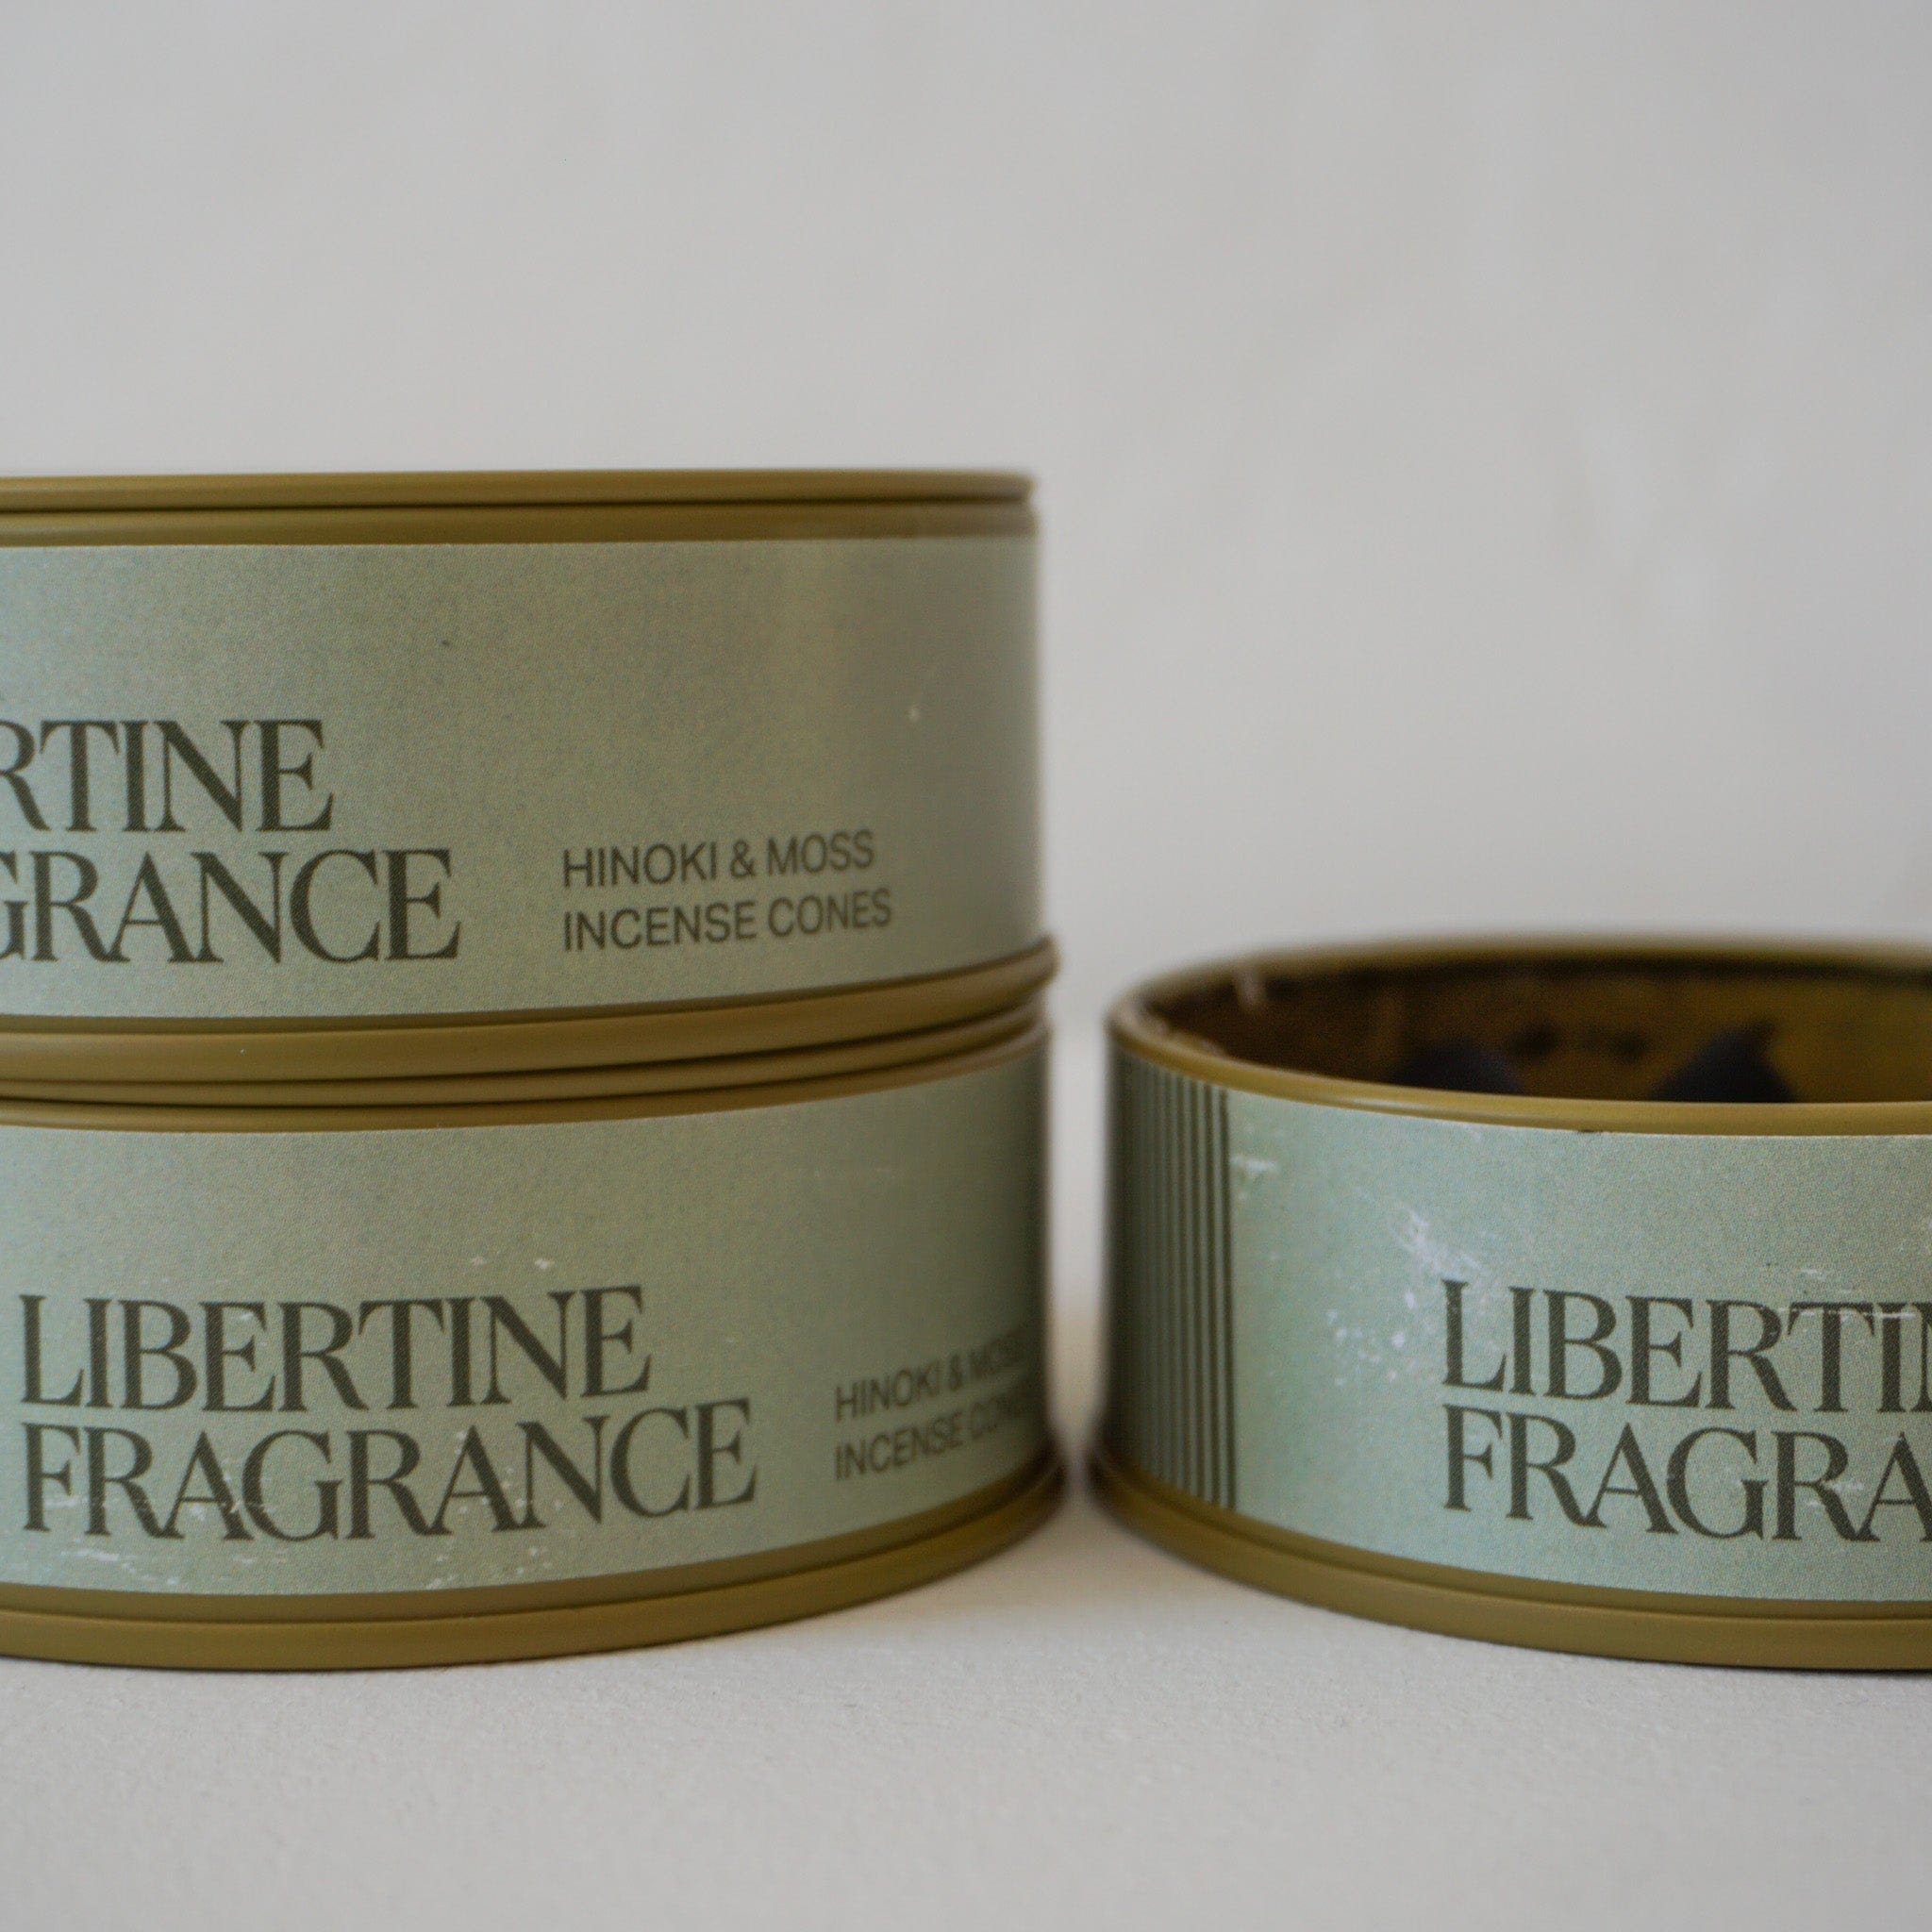 Libertine Fragrance Apothecary Hinoki & Moss Incense Cones